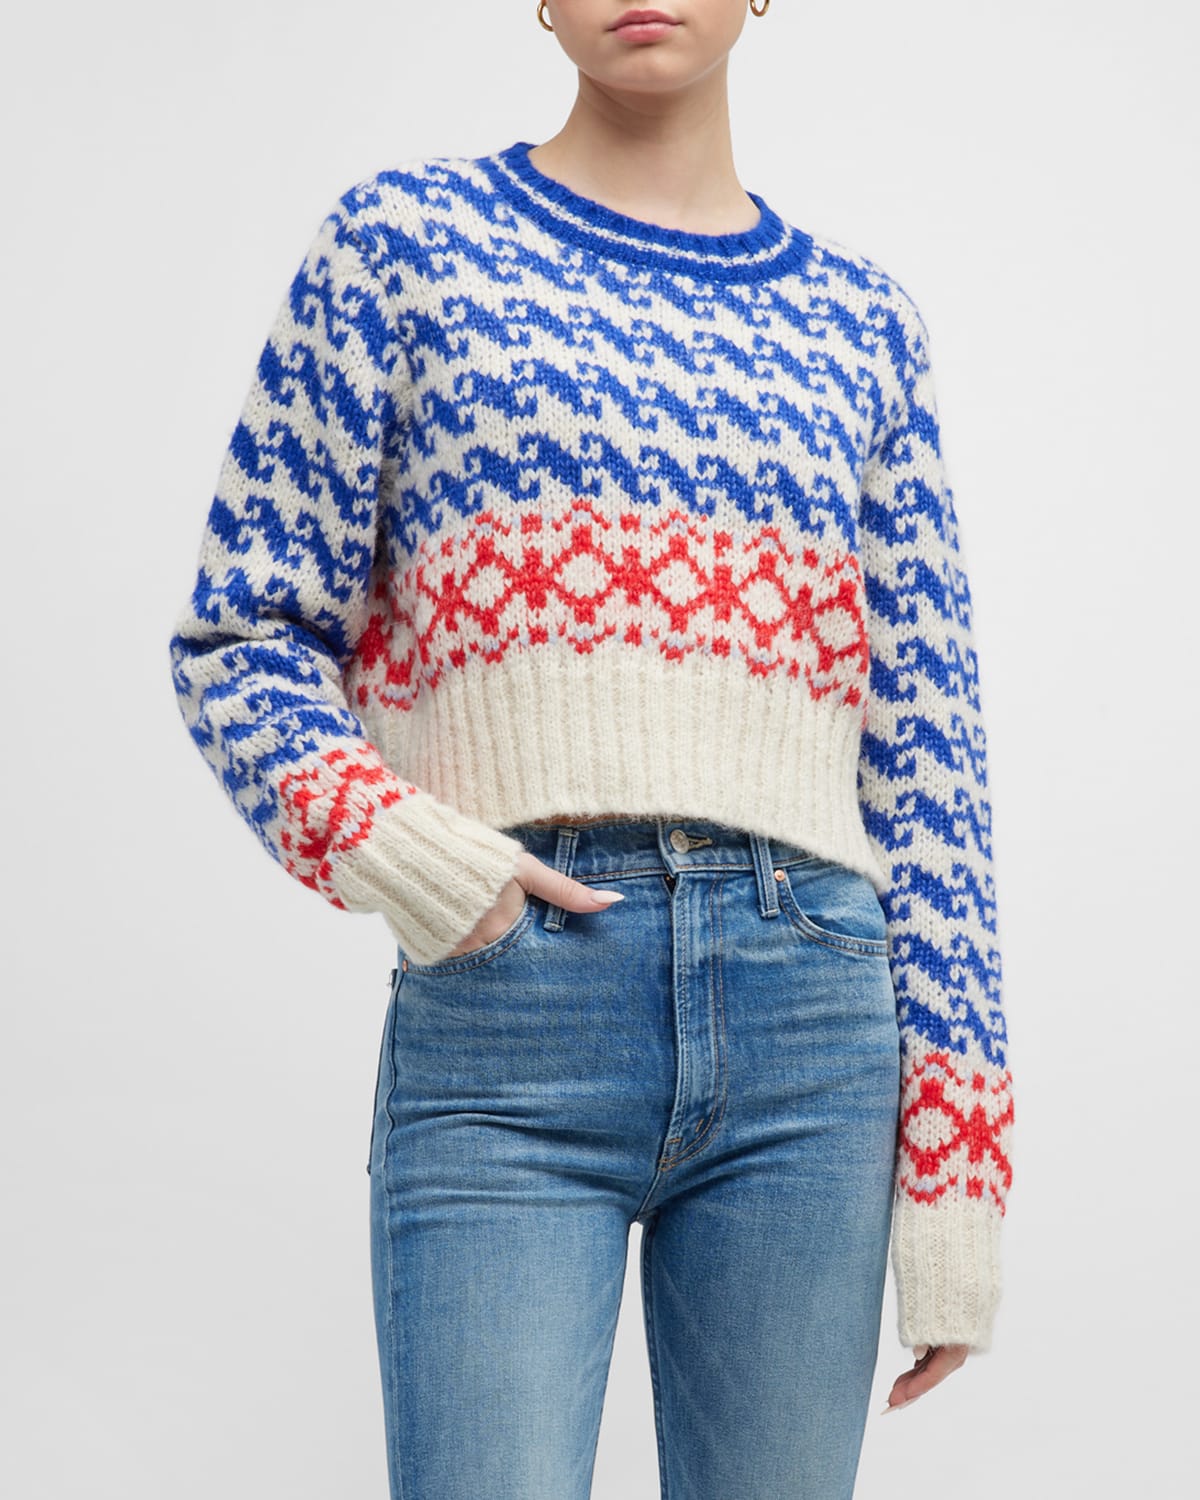 The Wide Sleeve Jumper Crop Sweater